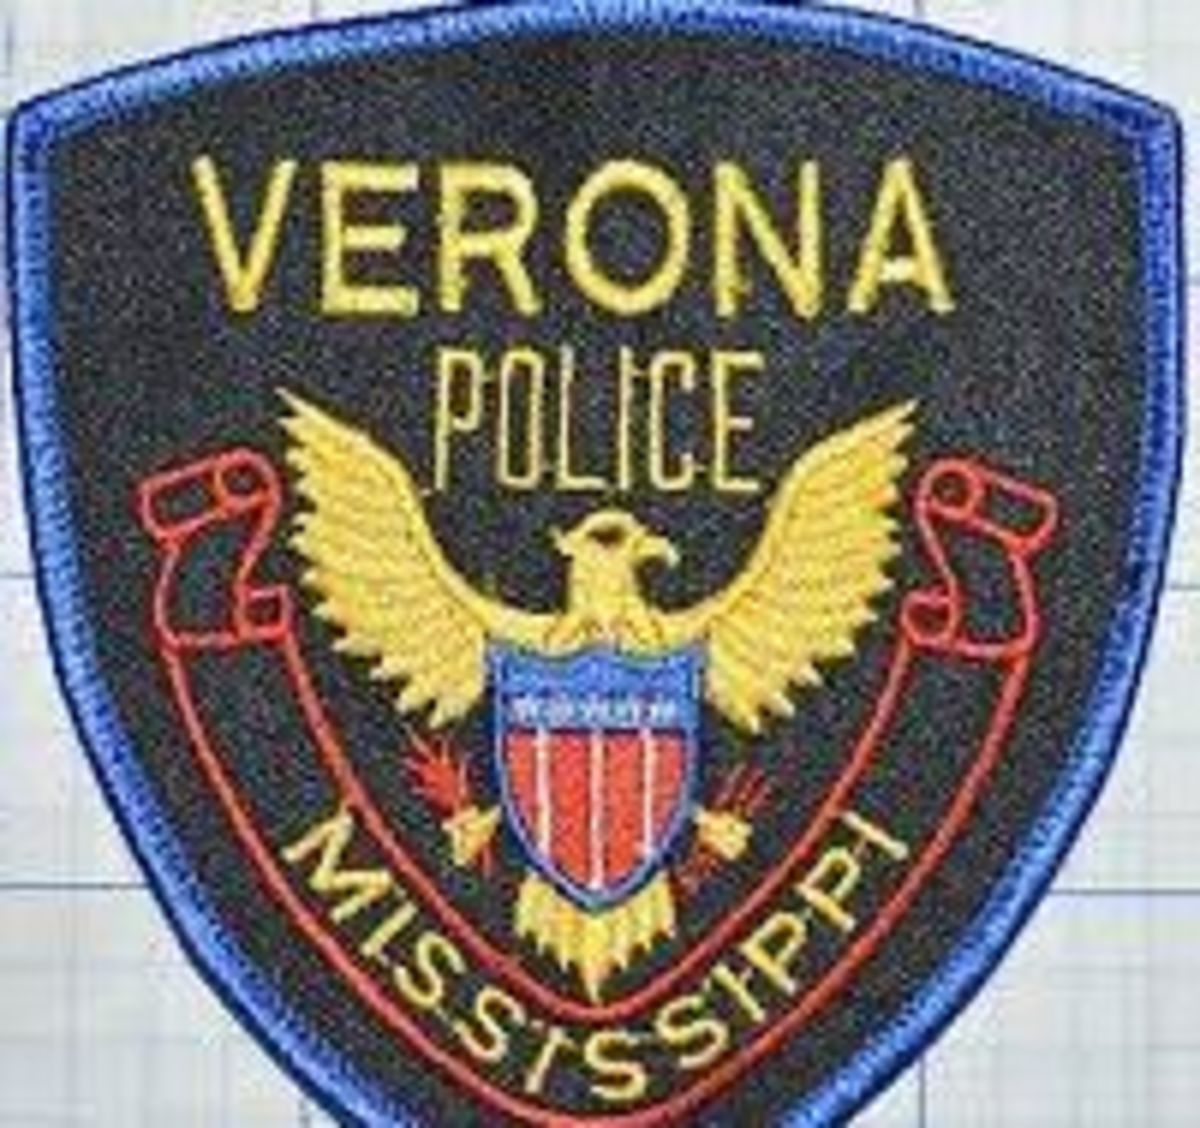 Verona Police Department Patch